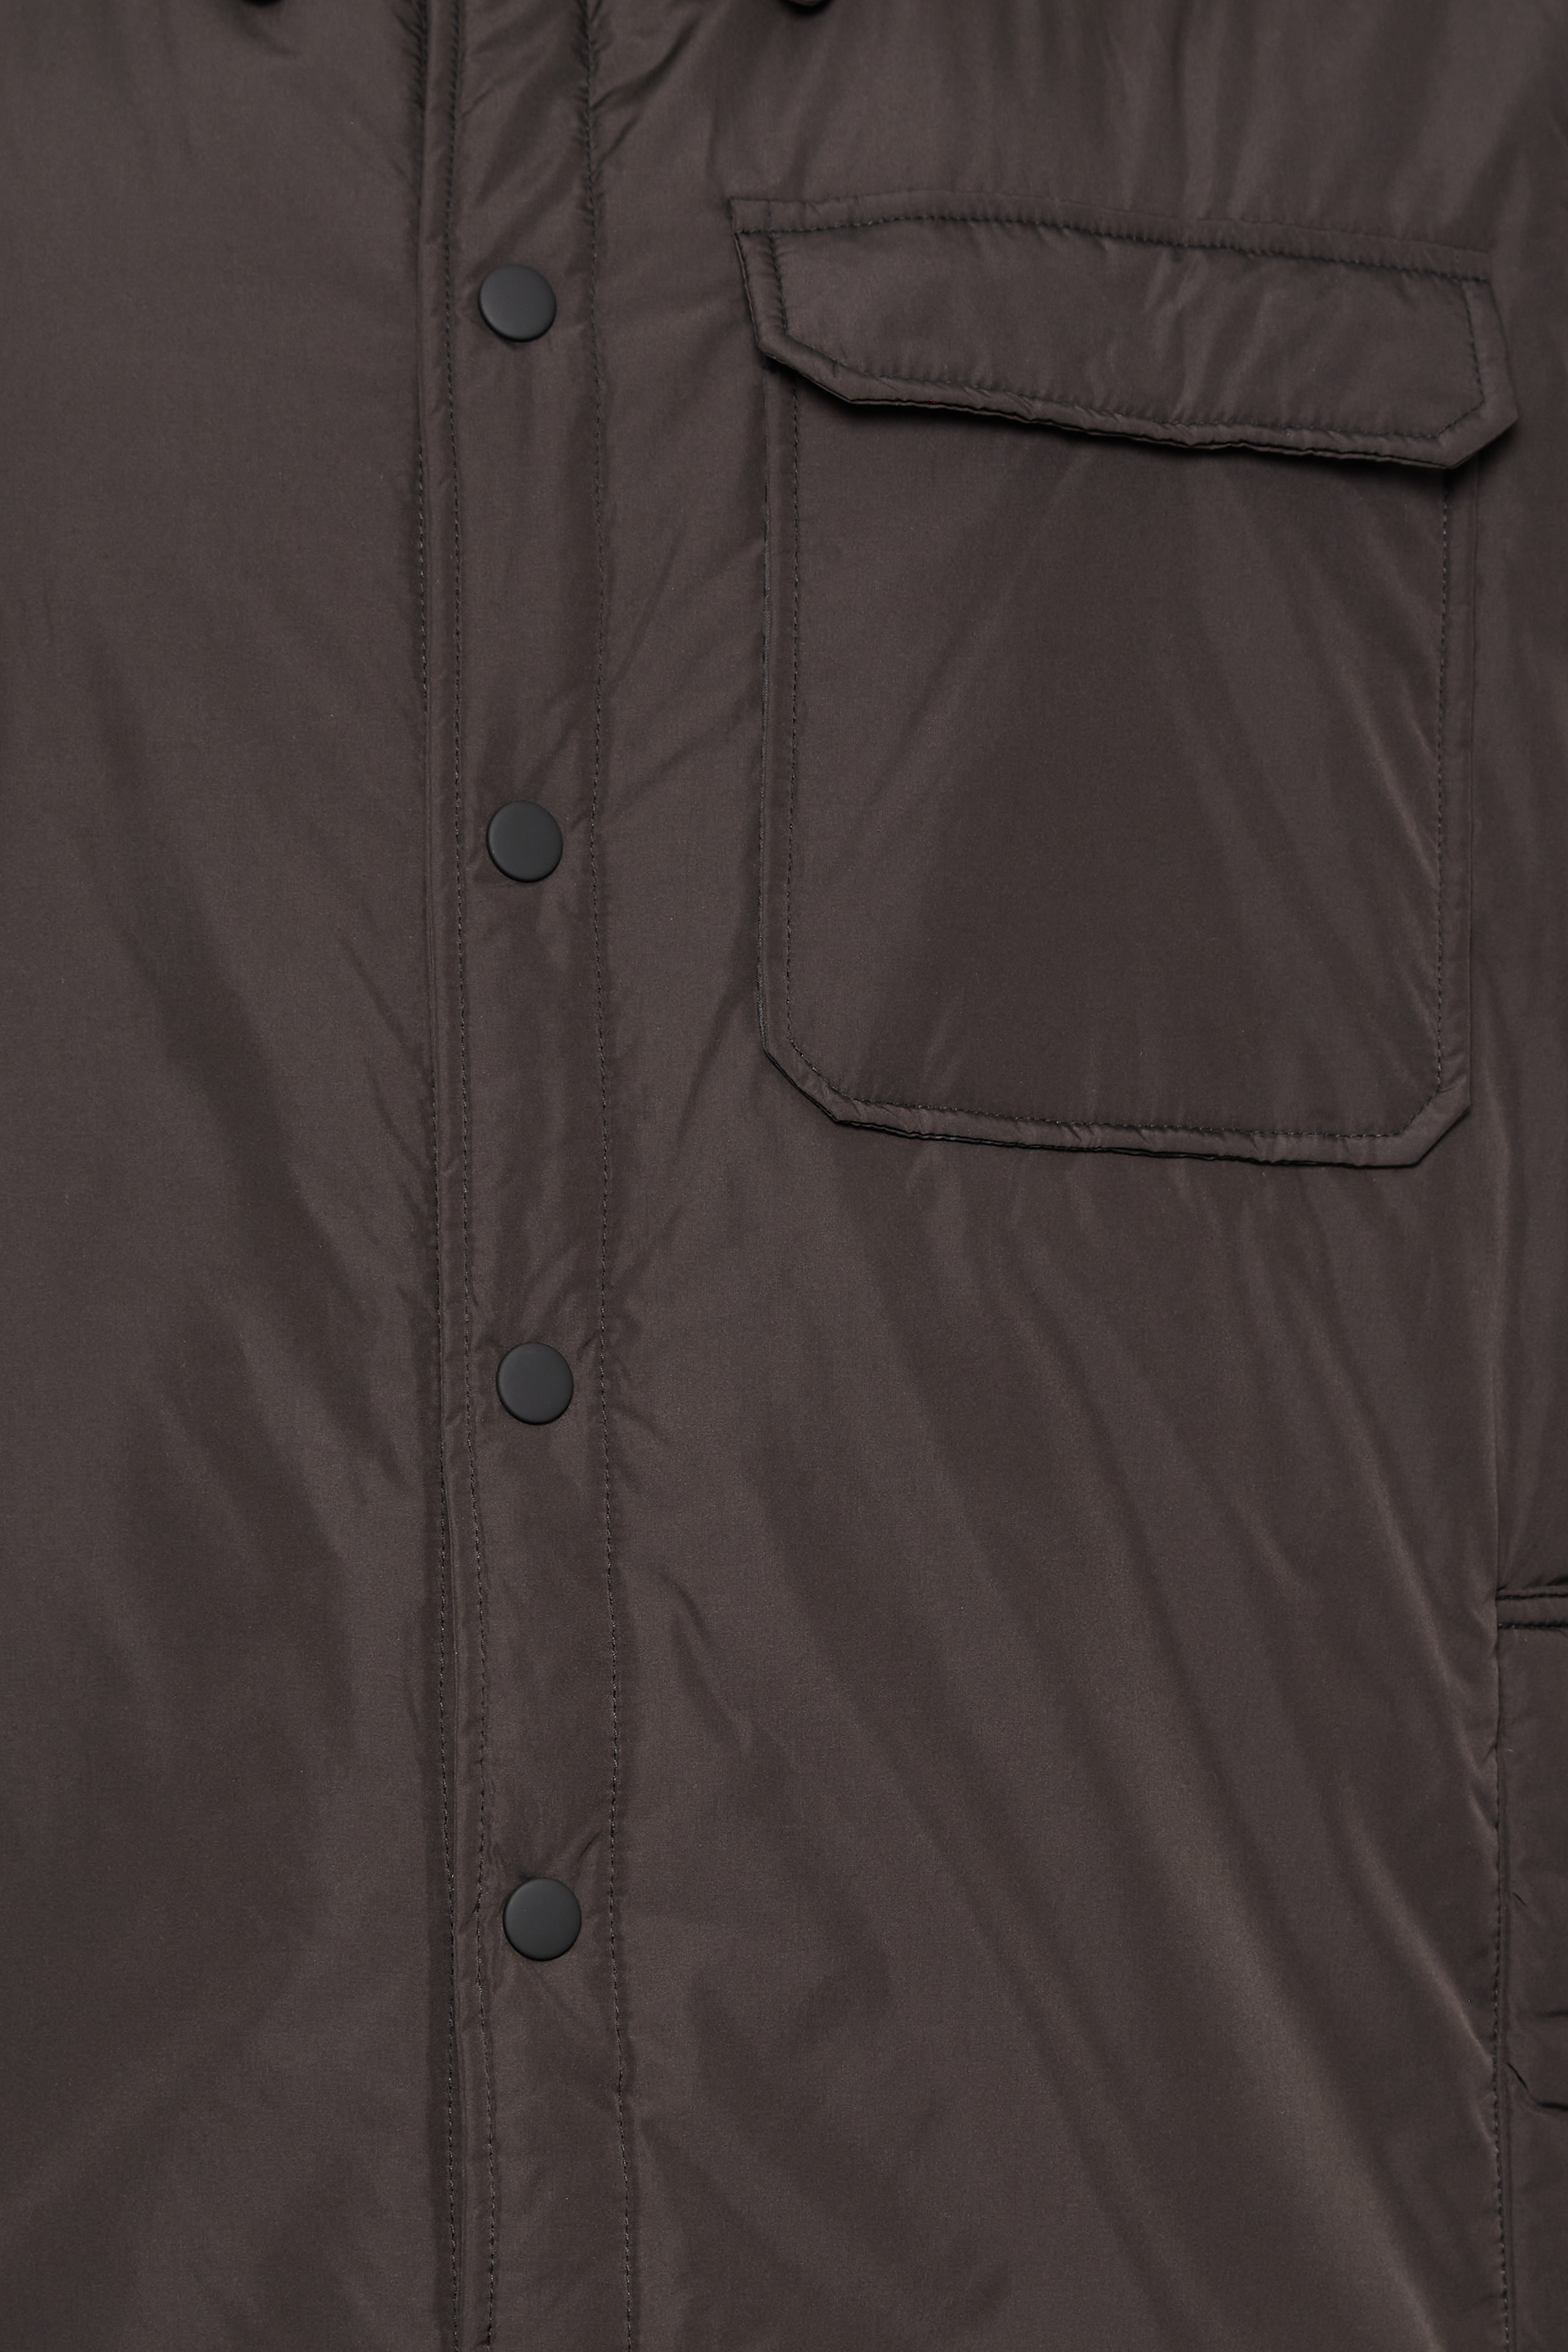 BadRhino Plus Size Mens Big & Tall Black Button Up Jacket | BadRhino  3